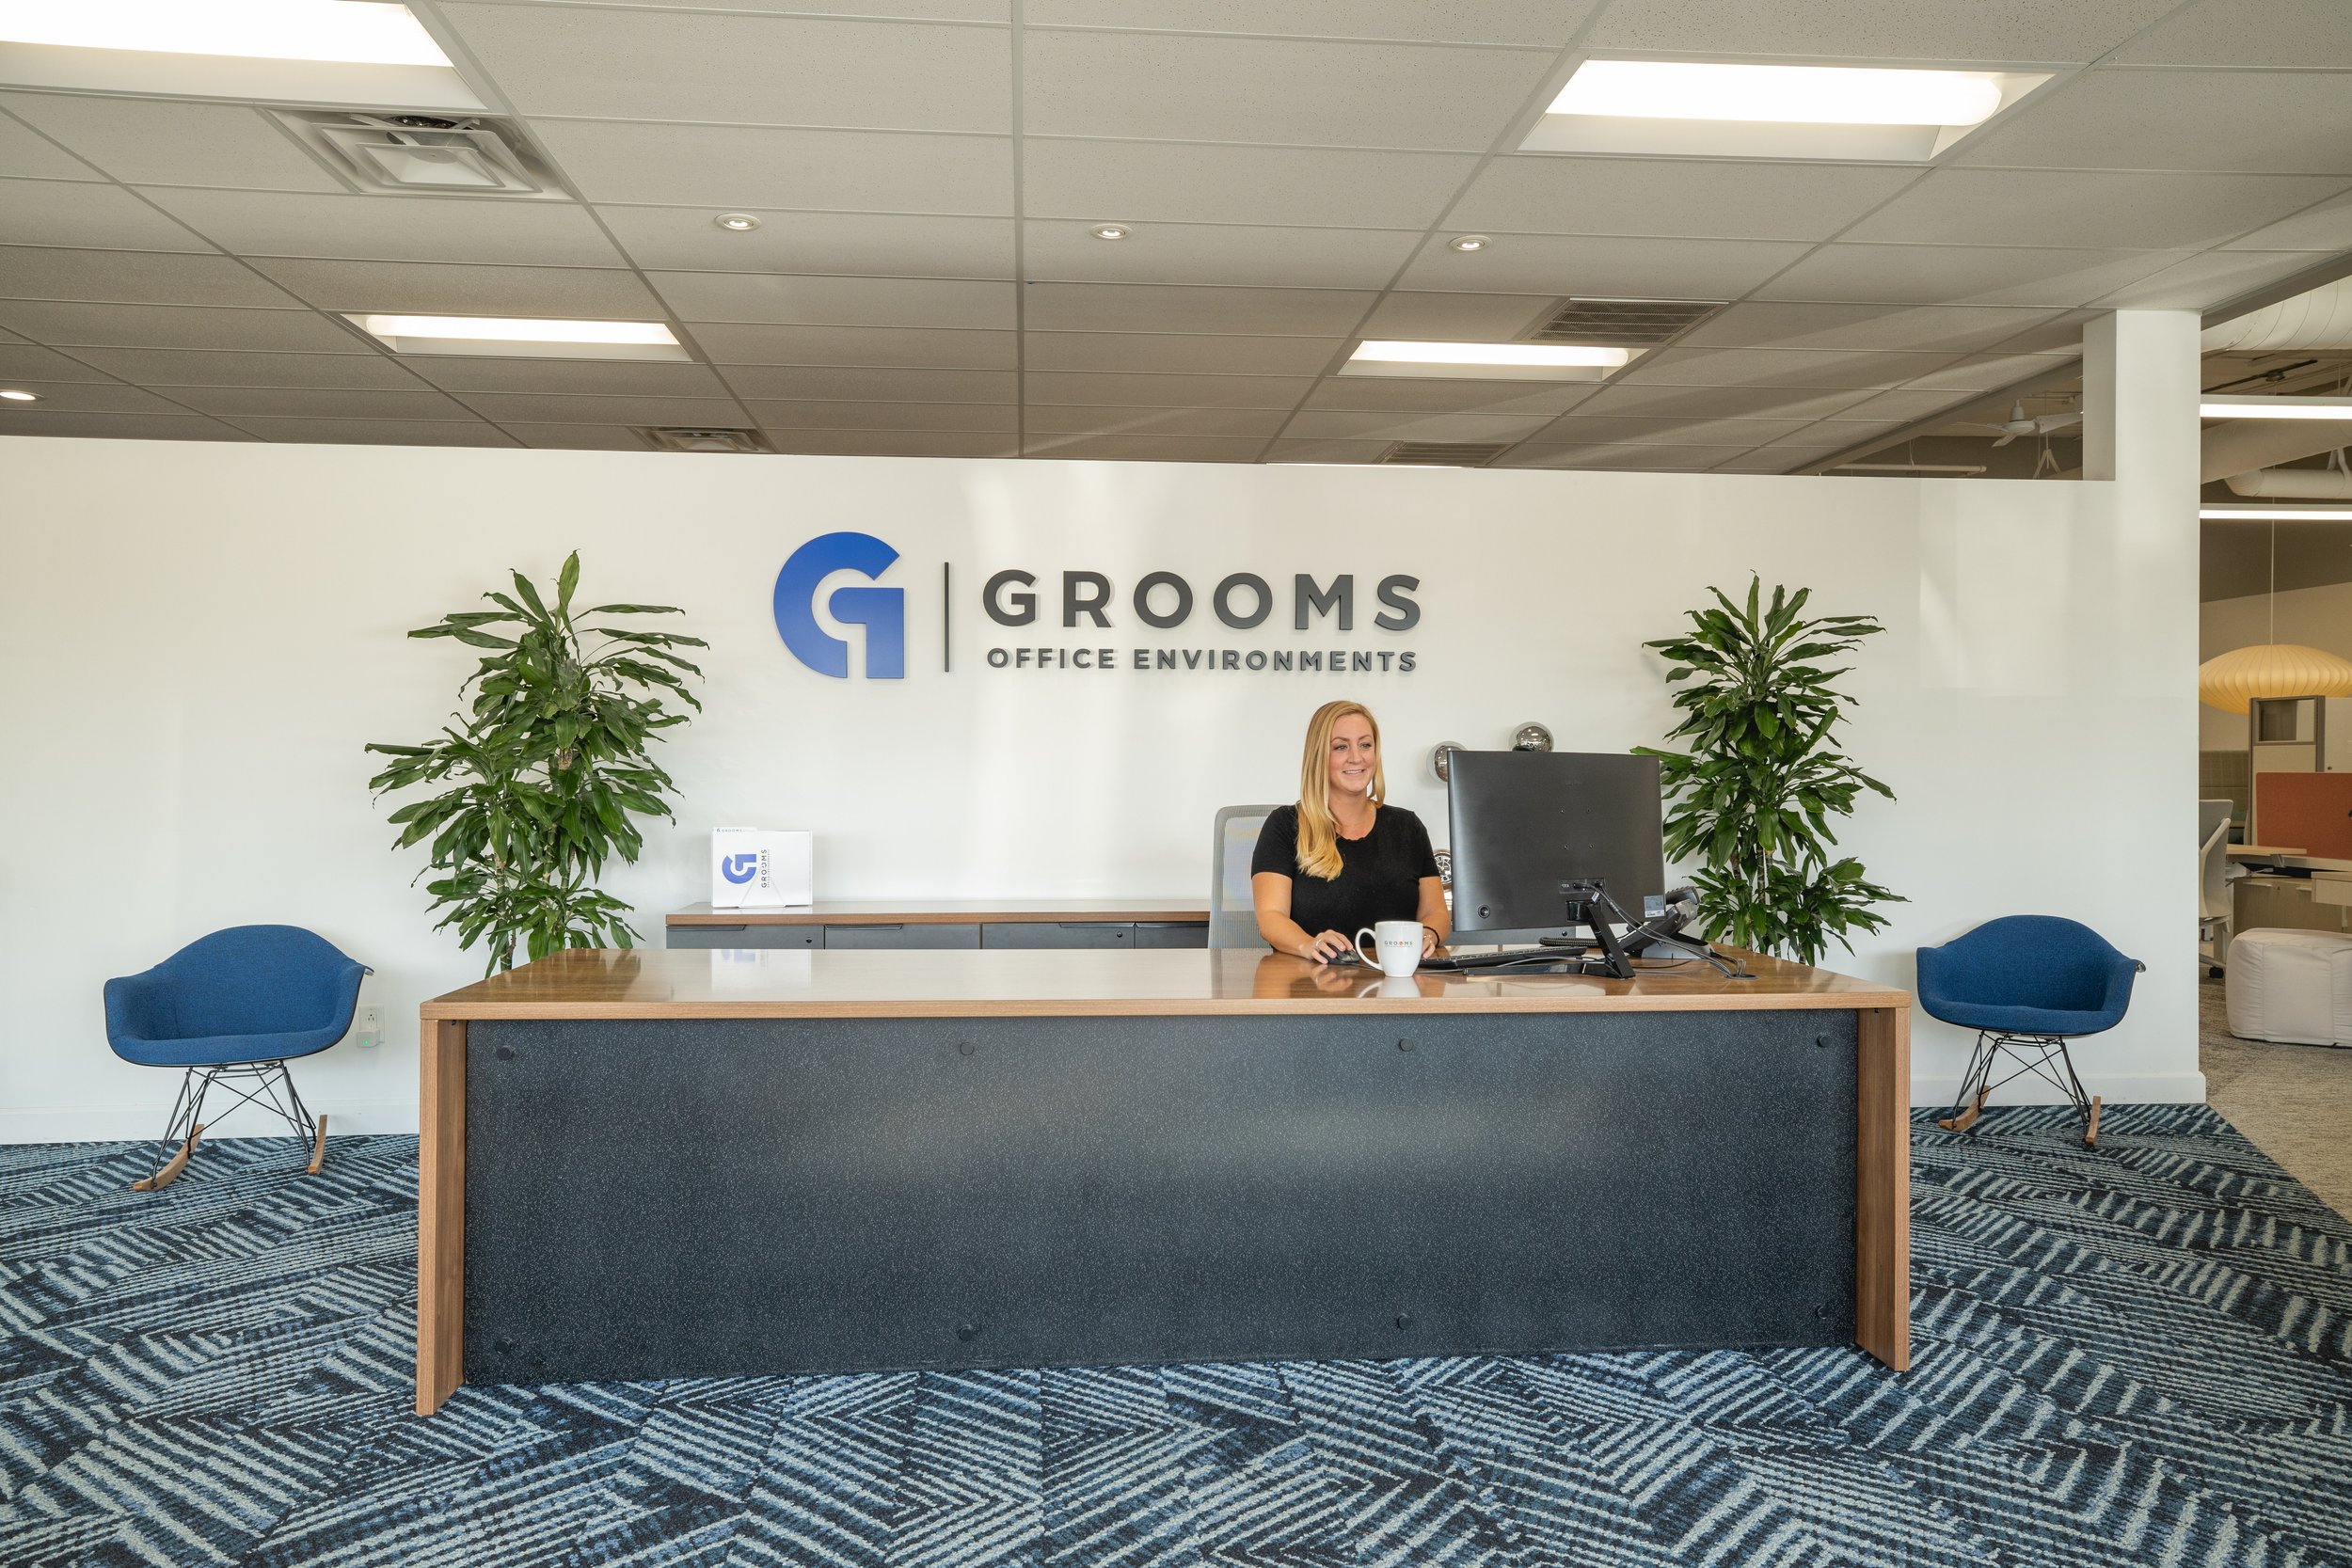 Grooms Office Environment-Entrance-Lobby-with Hannah.jpg